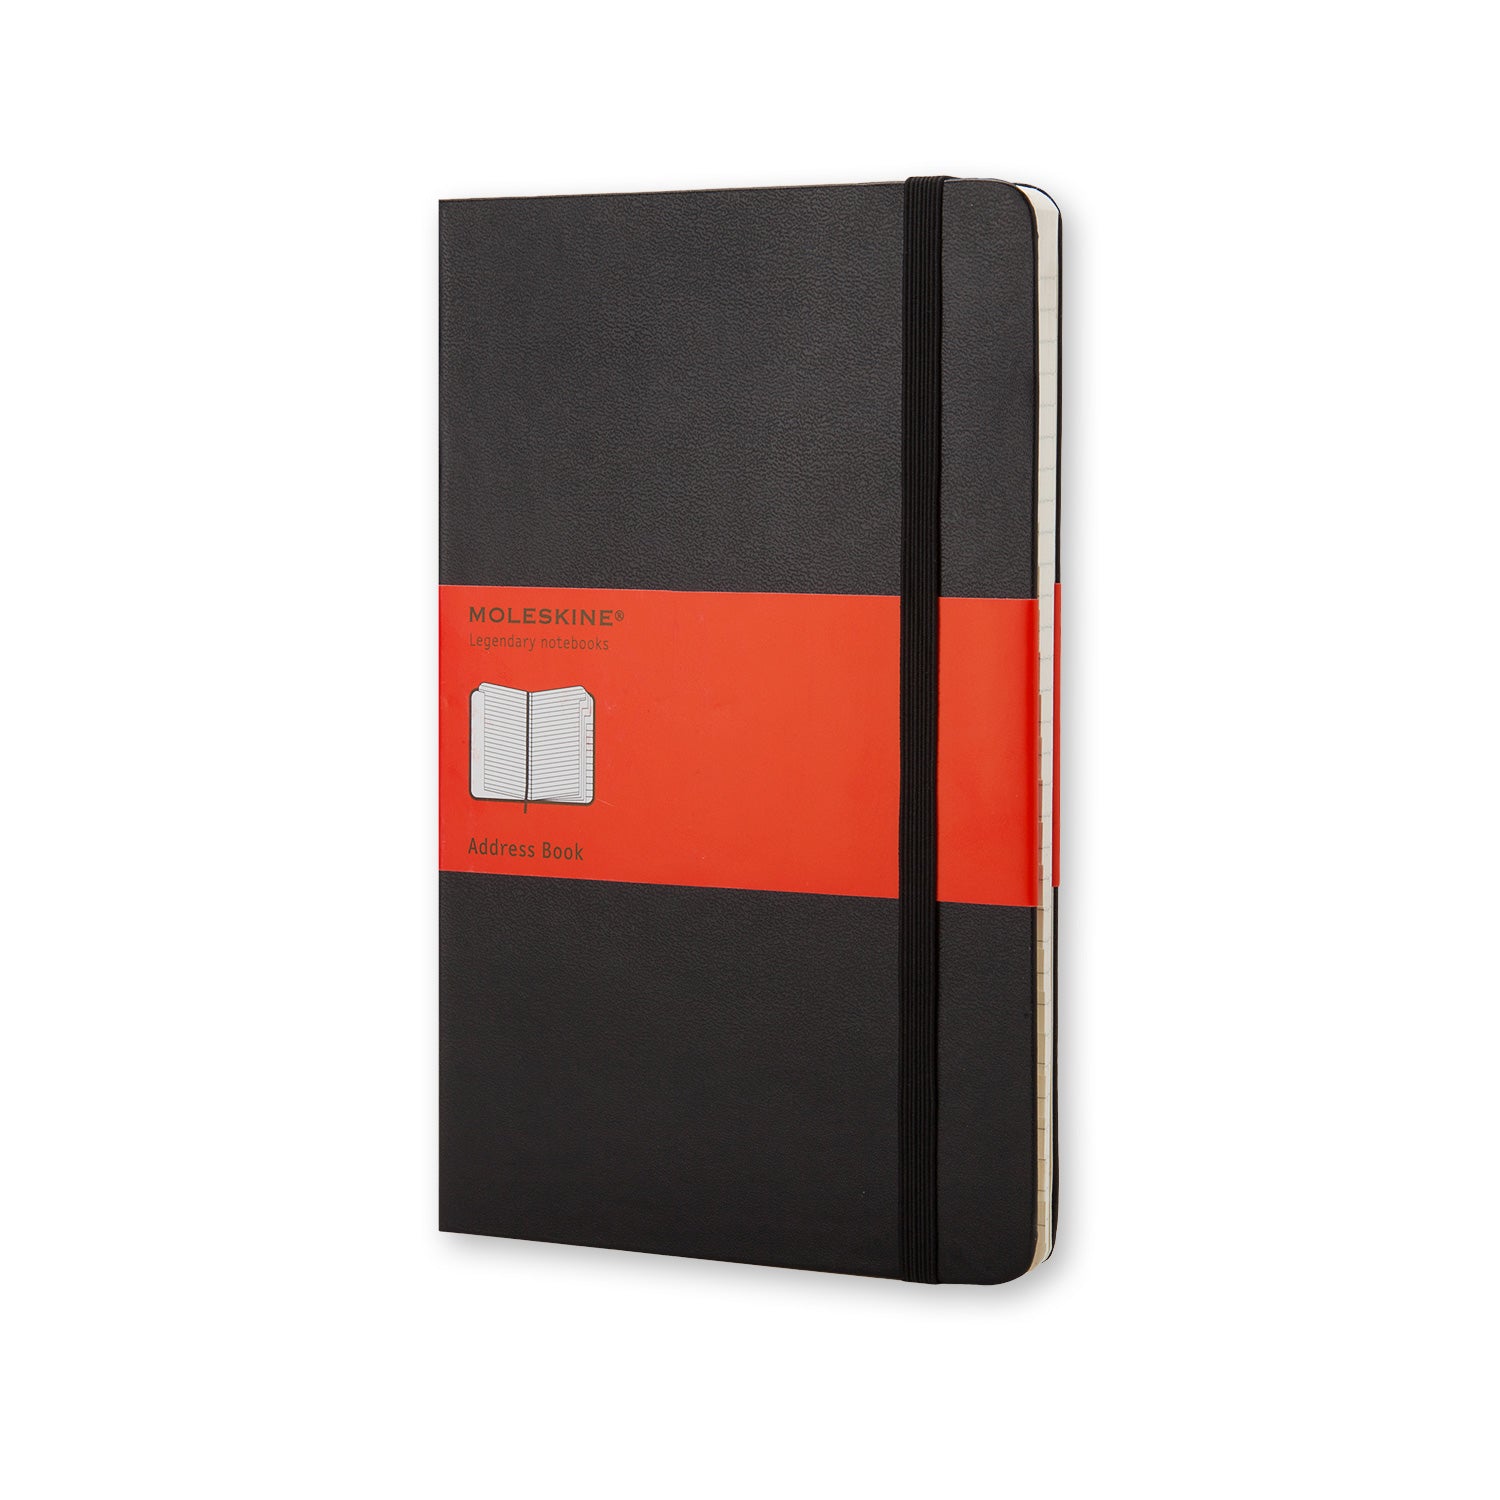 Moleskine Address Book - Large Black Hard Cover